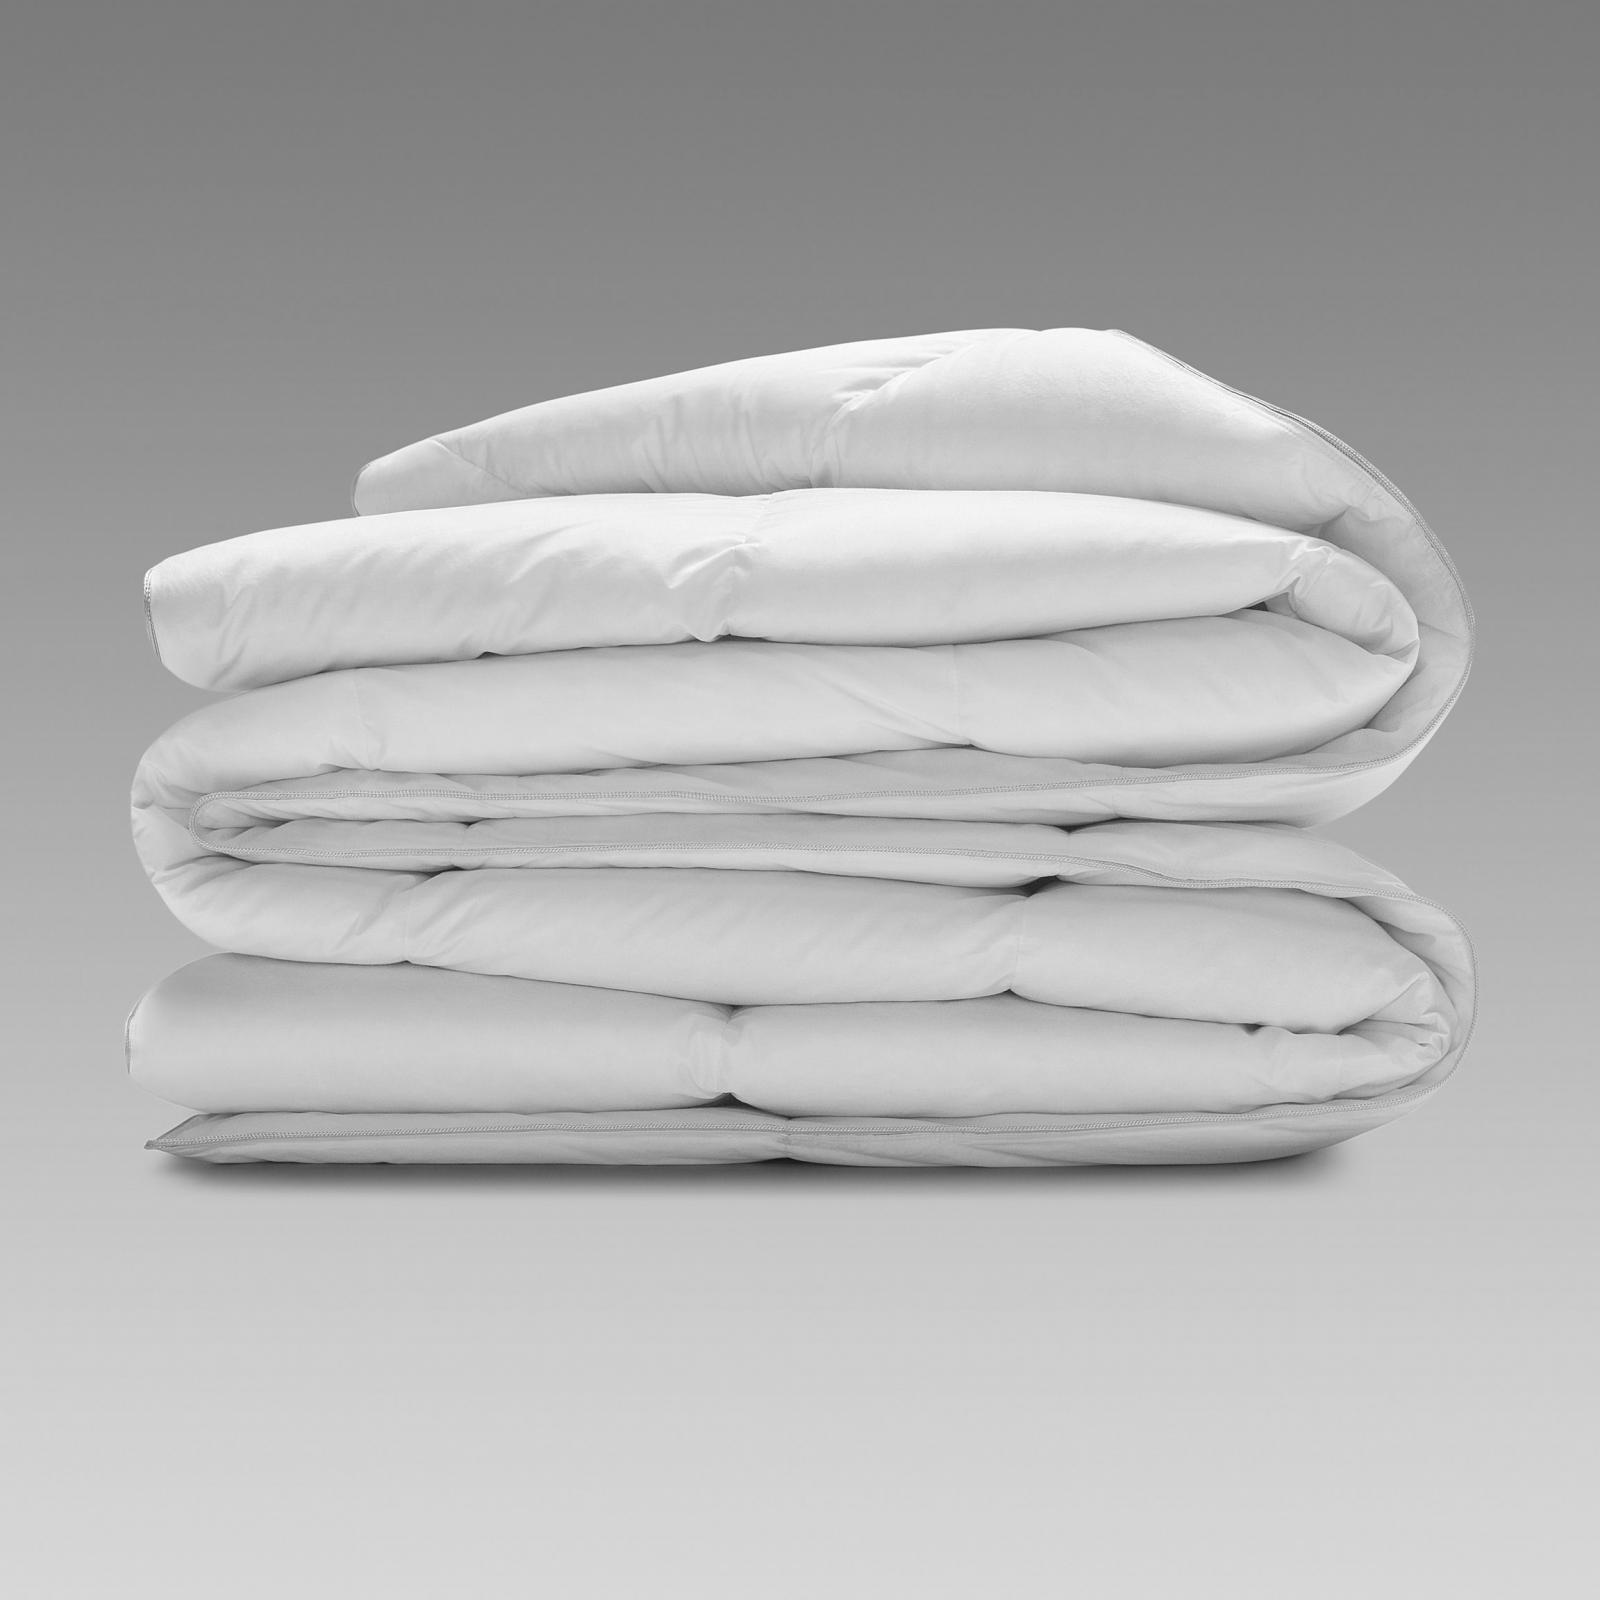 Одеяло Кайзер (20.04.13.0051), цвет белый, размер 200х210 см - фото 3